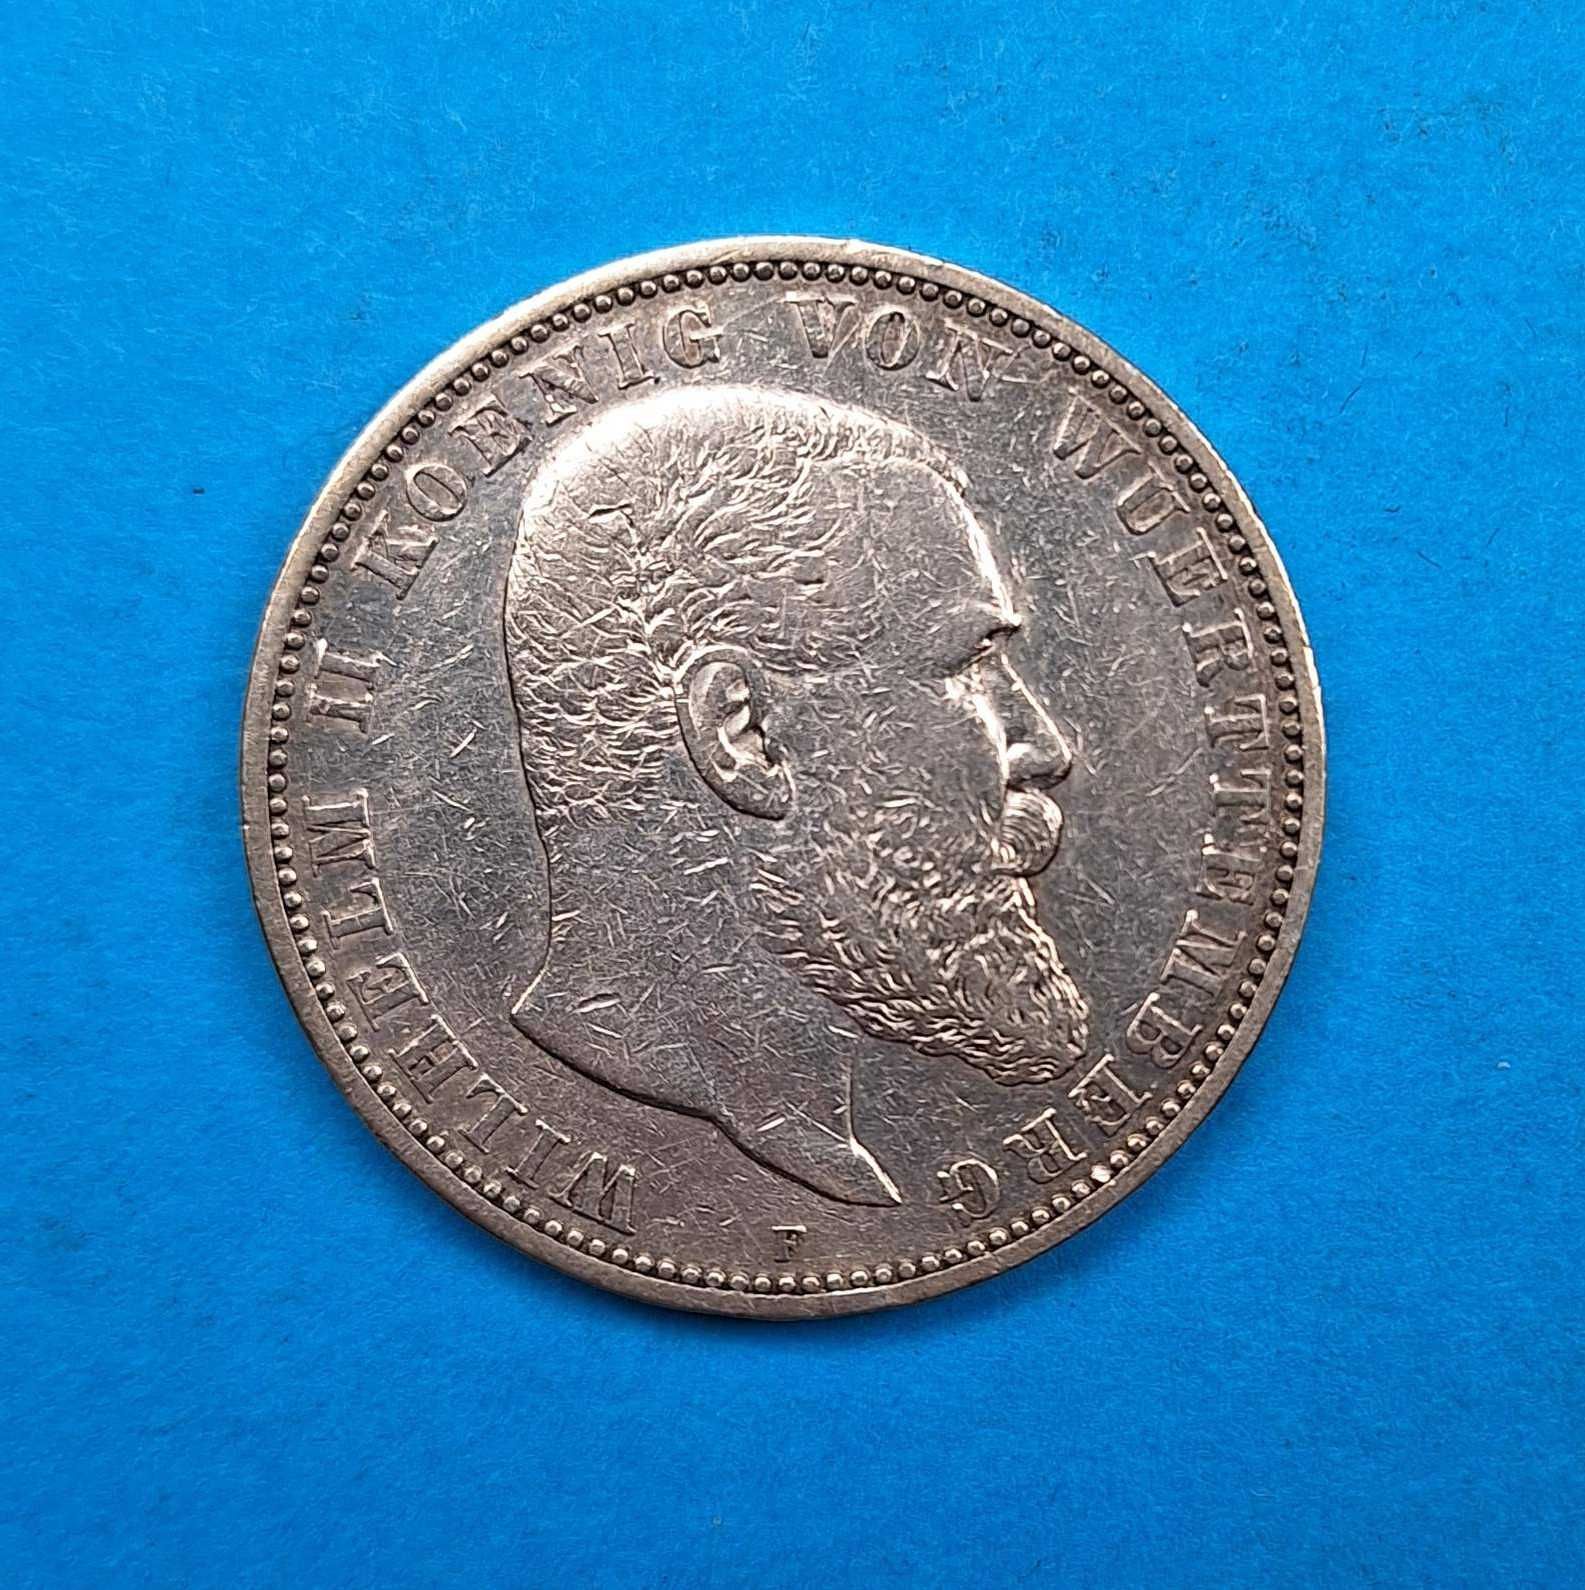 Niemcy 5 marek rok 1895, Wirtembergia, bdb stan, srebro 0,900